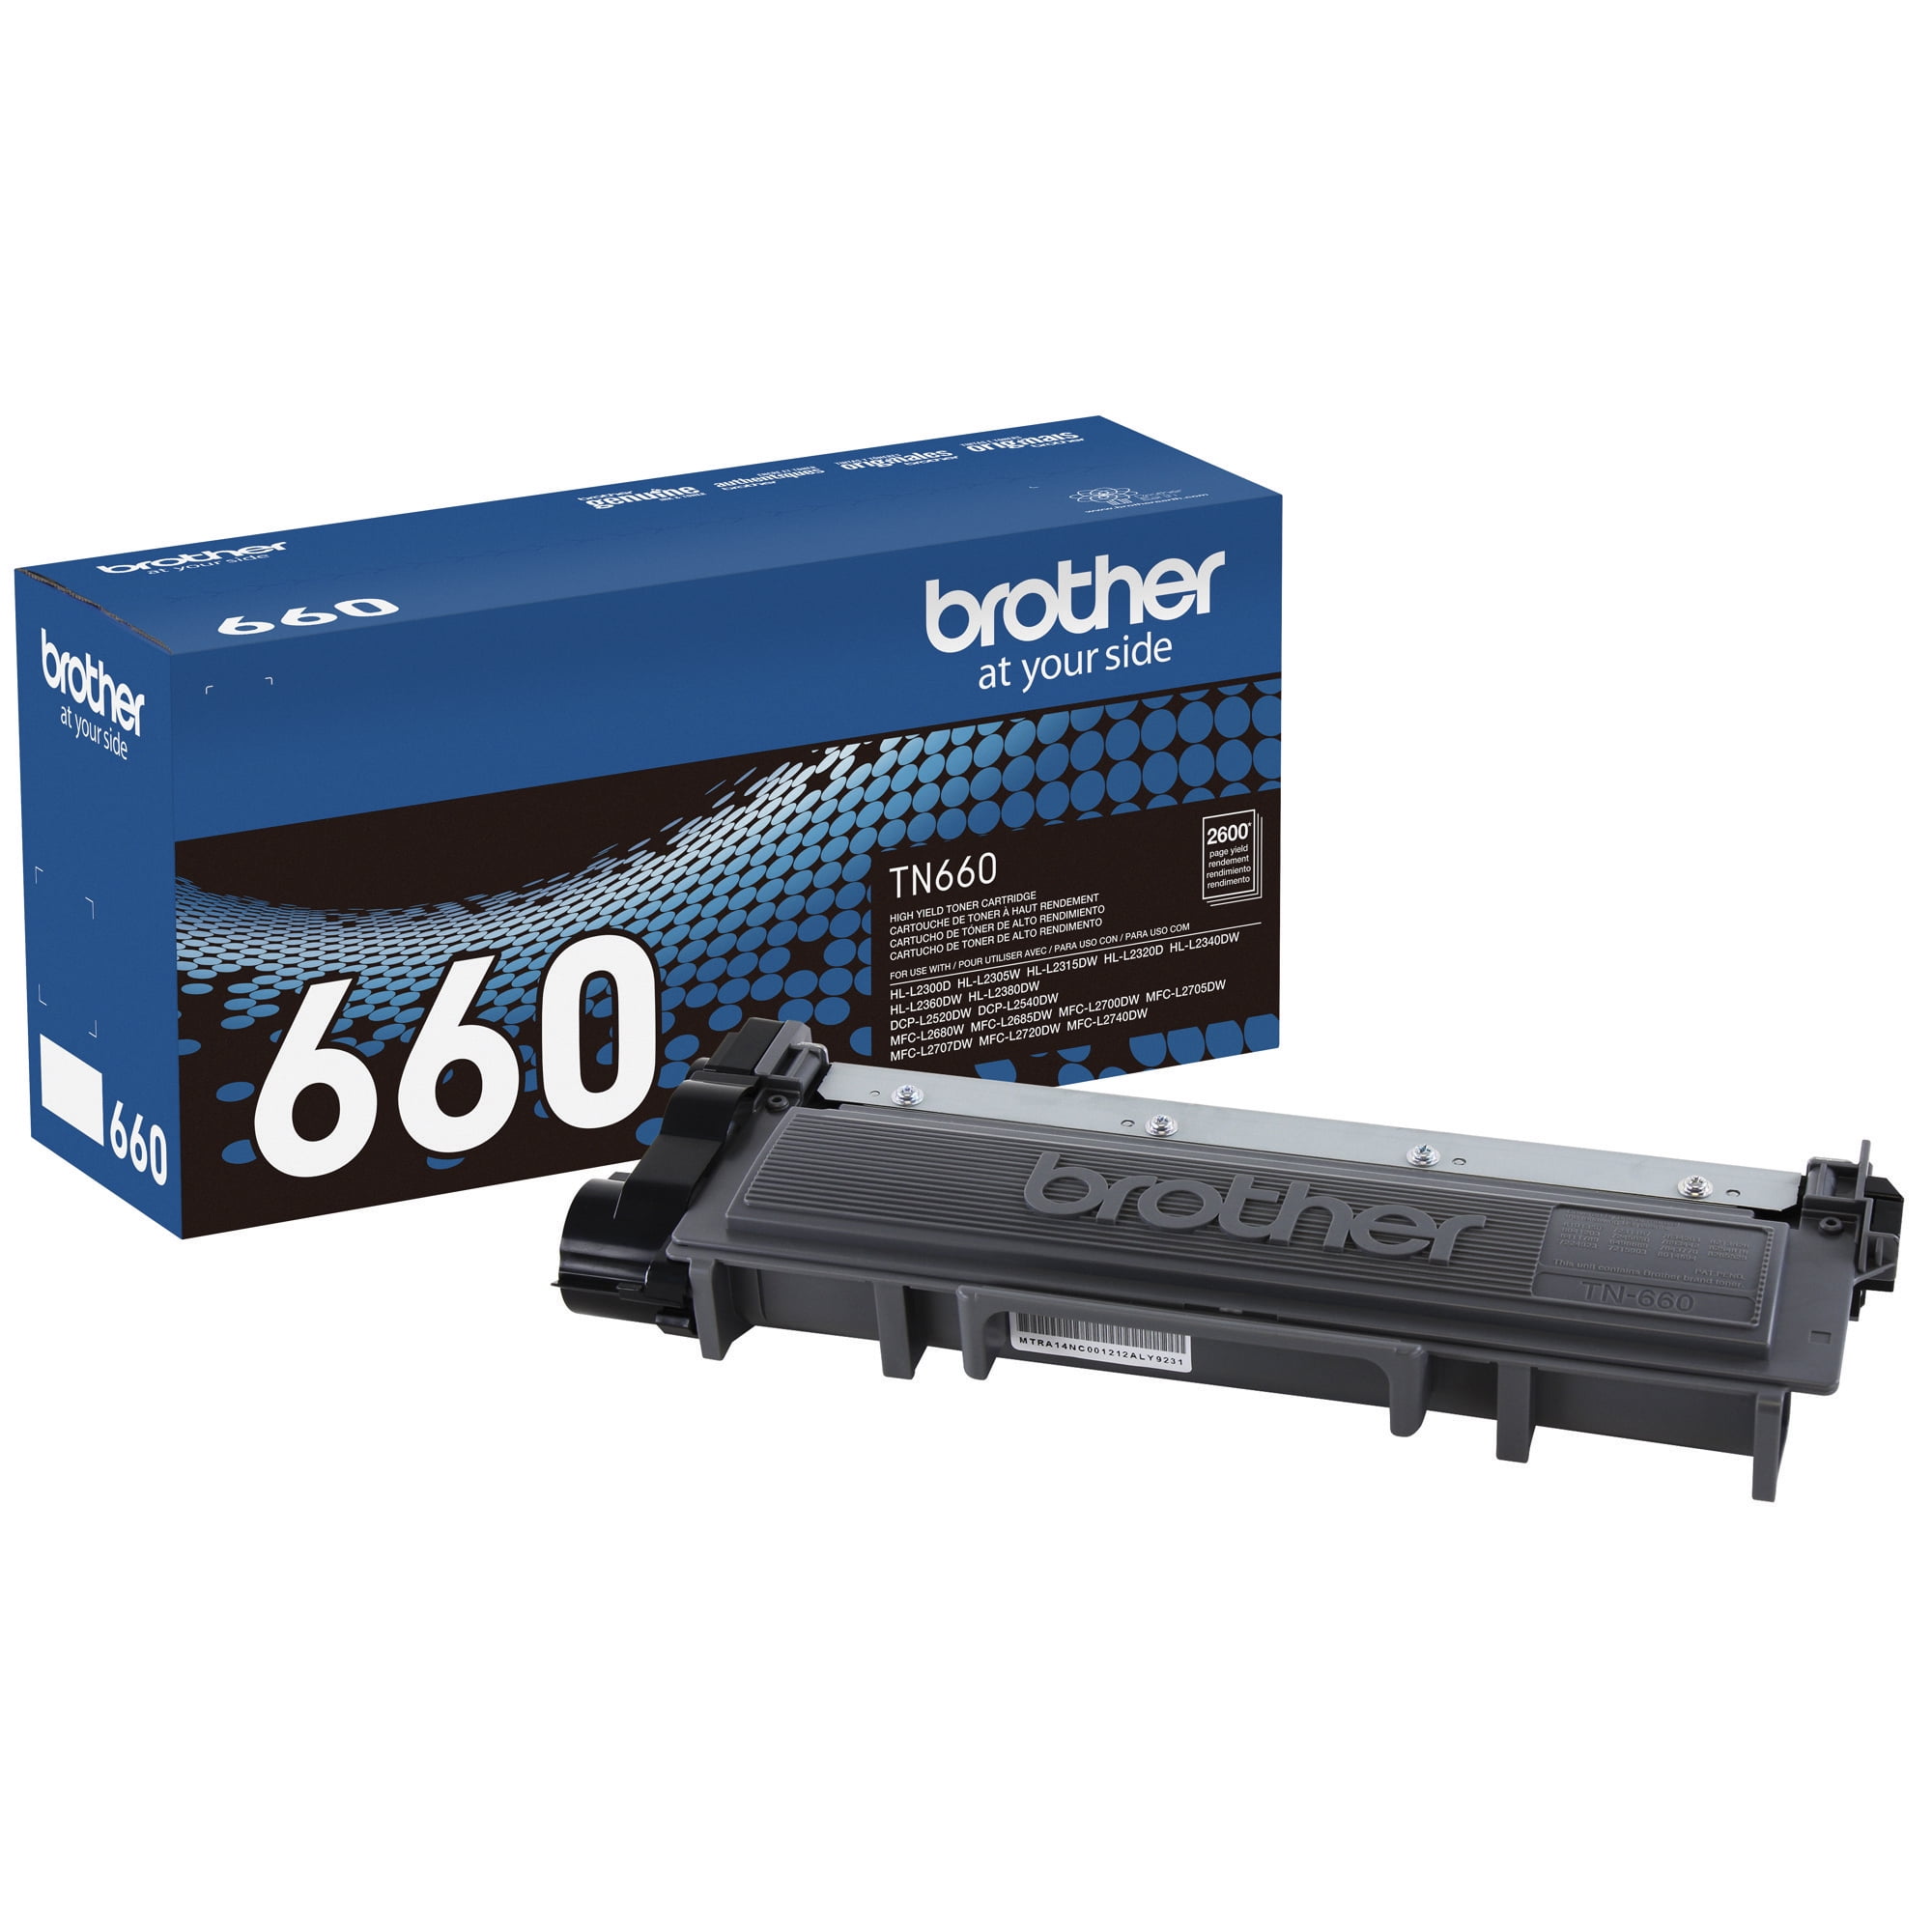 Brother High-yield Black Printer Toner Cartridge, TN660 -